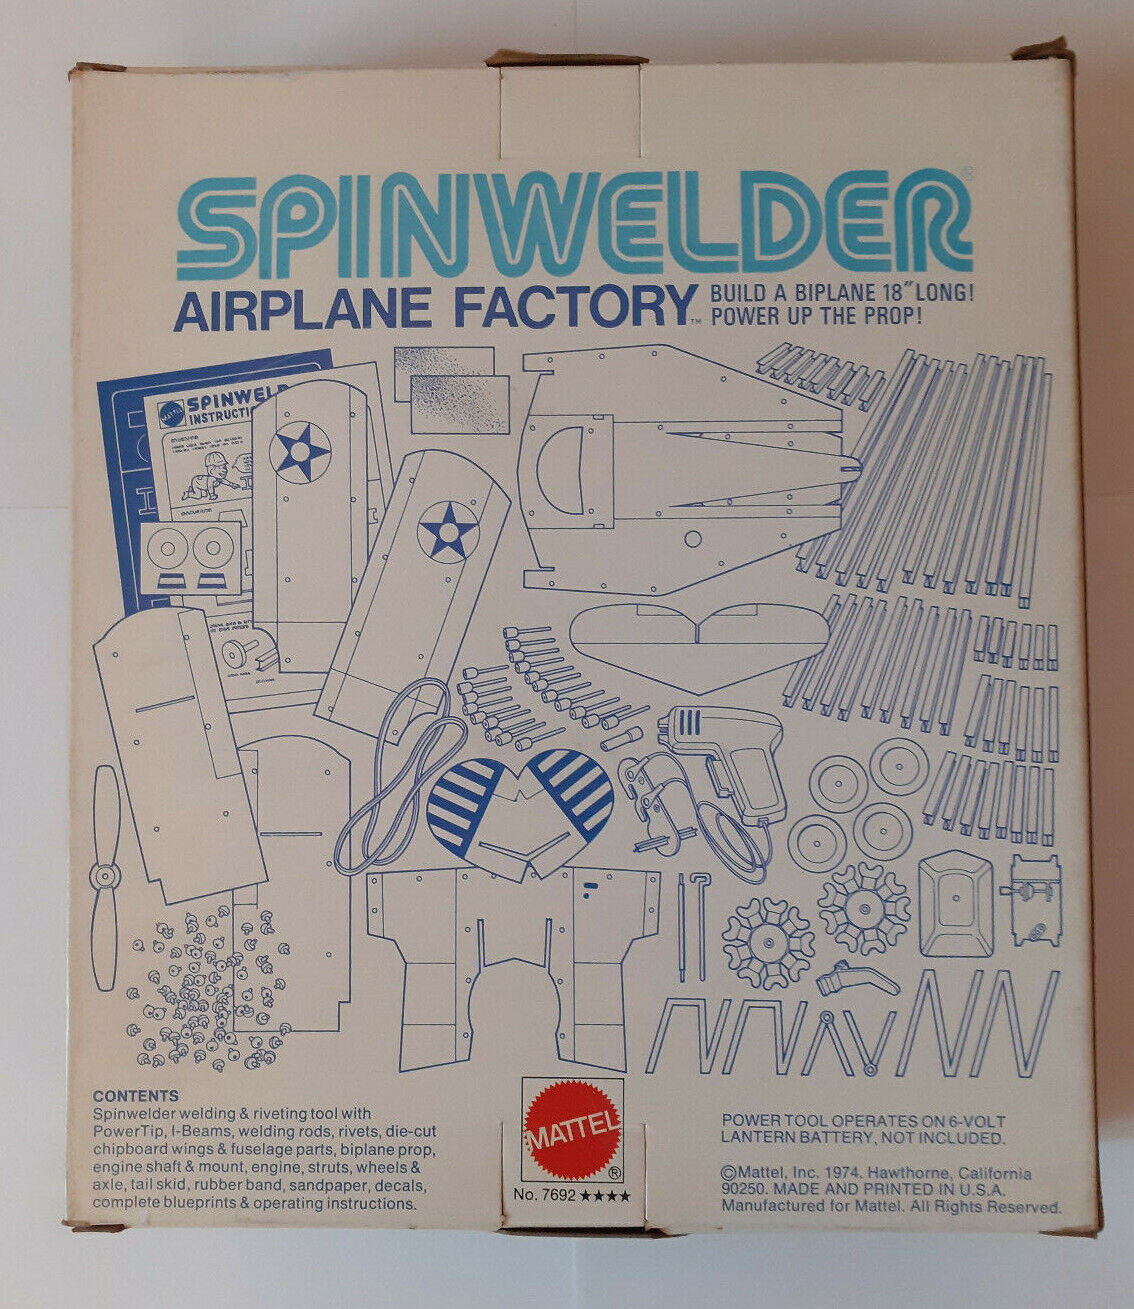 Spinwelder Airplane Factory